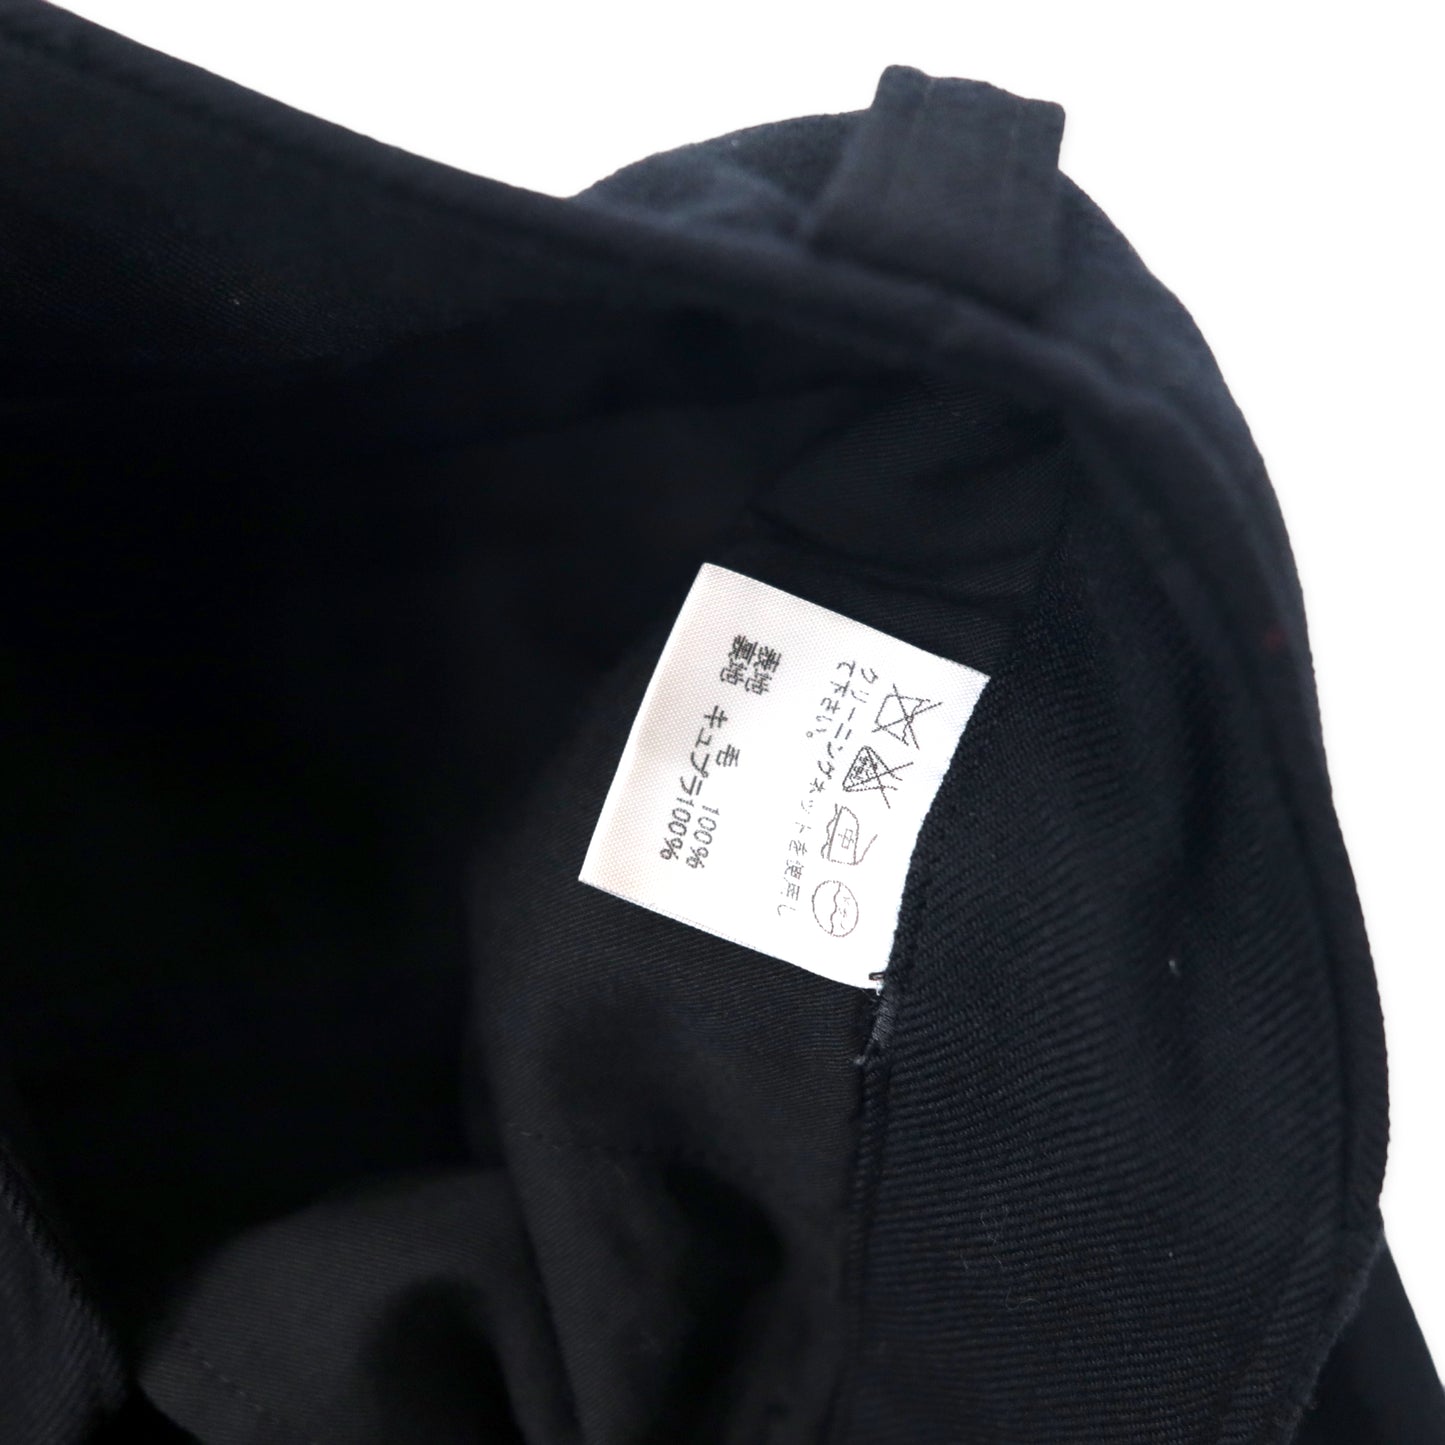 ISSEY MIYAKE WHITE LABEL Boots Cut Slacks Pants 2 Black Wool Gabazine  IM34FF585 Japan MADE